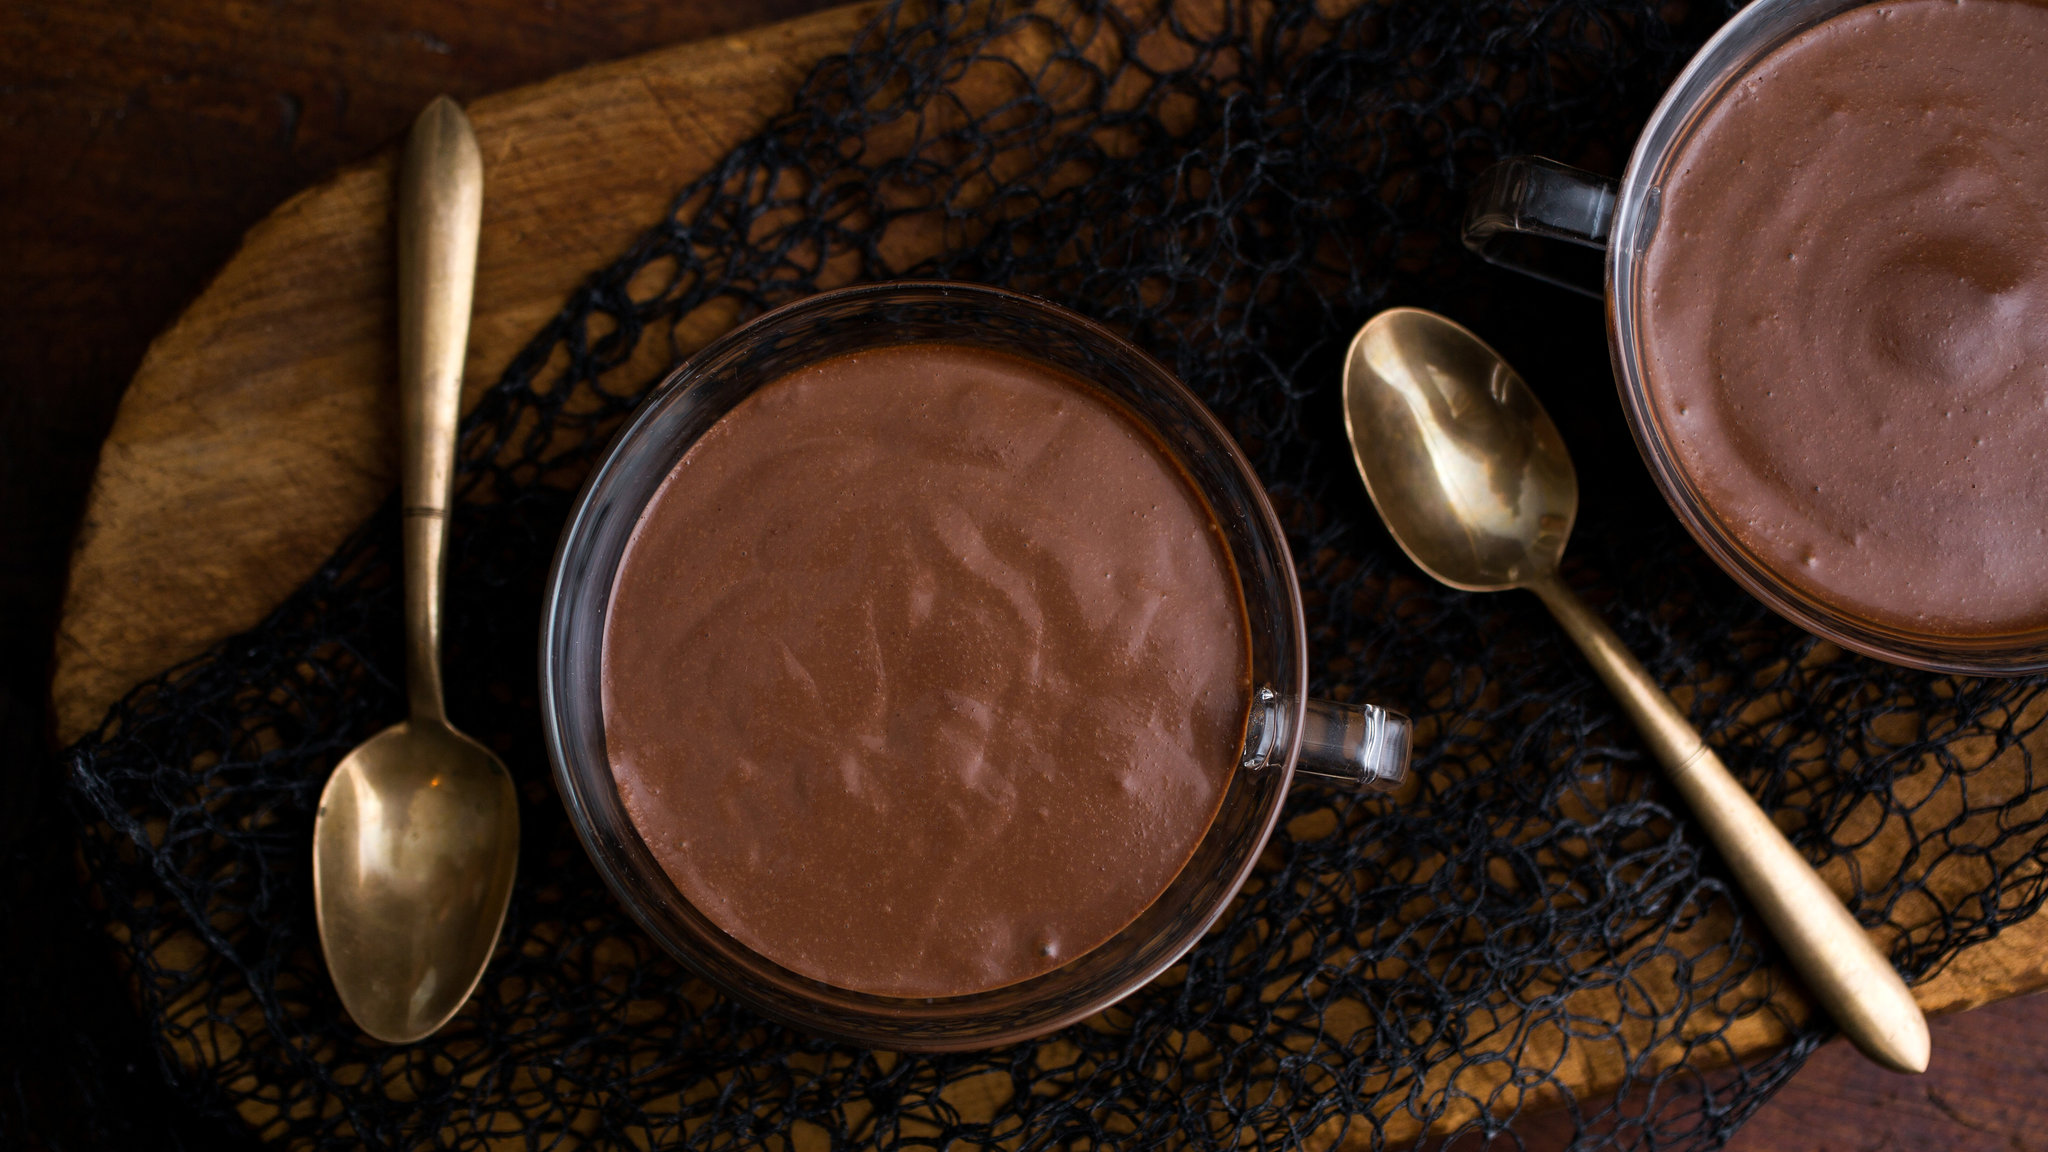 chocolate-pudding